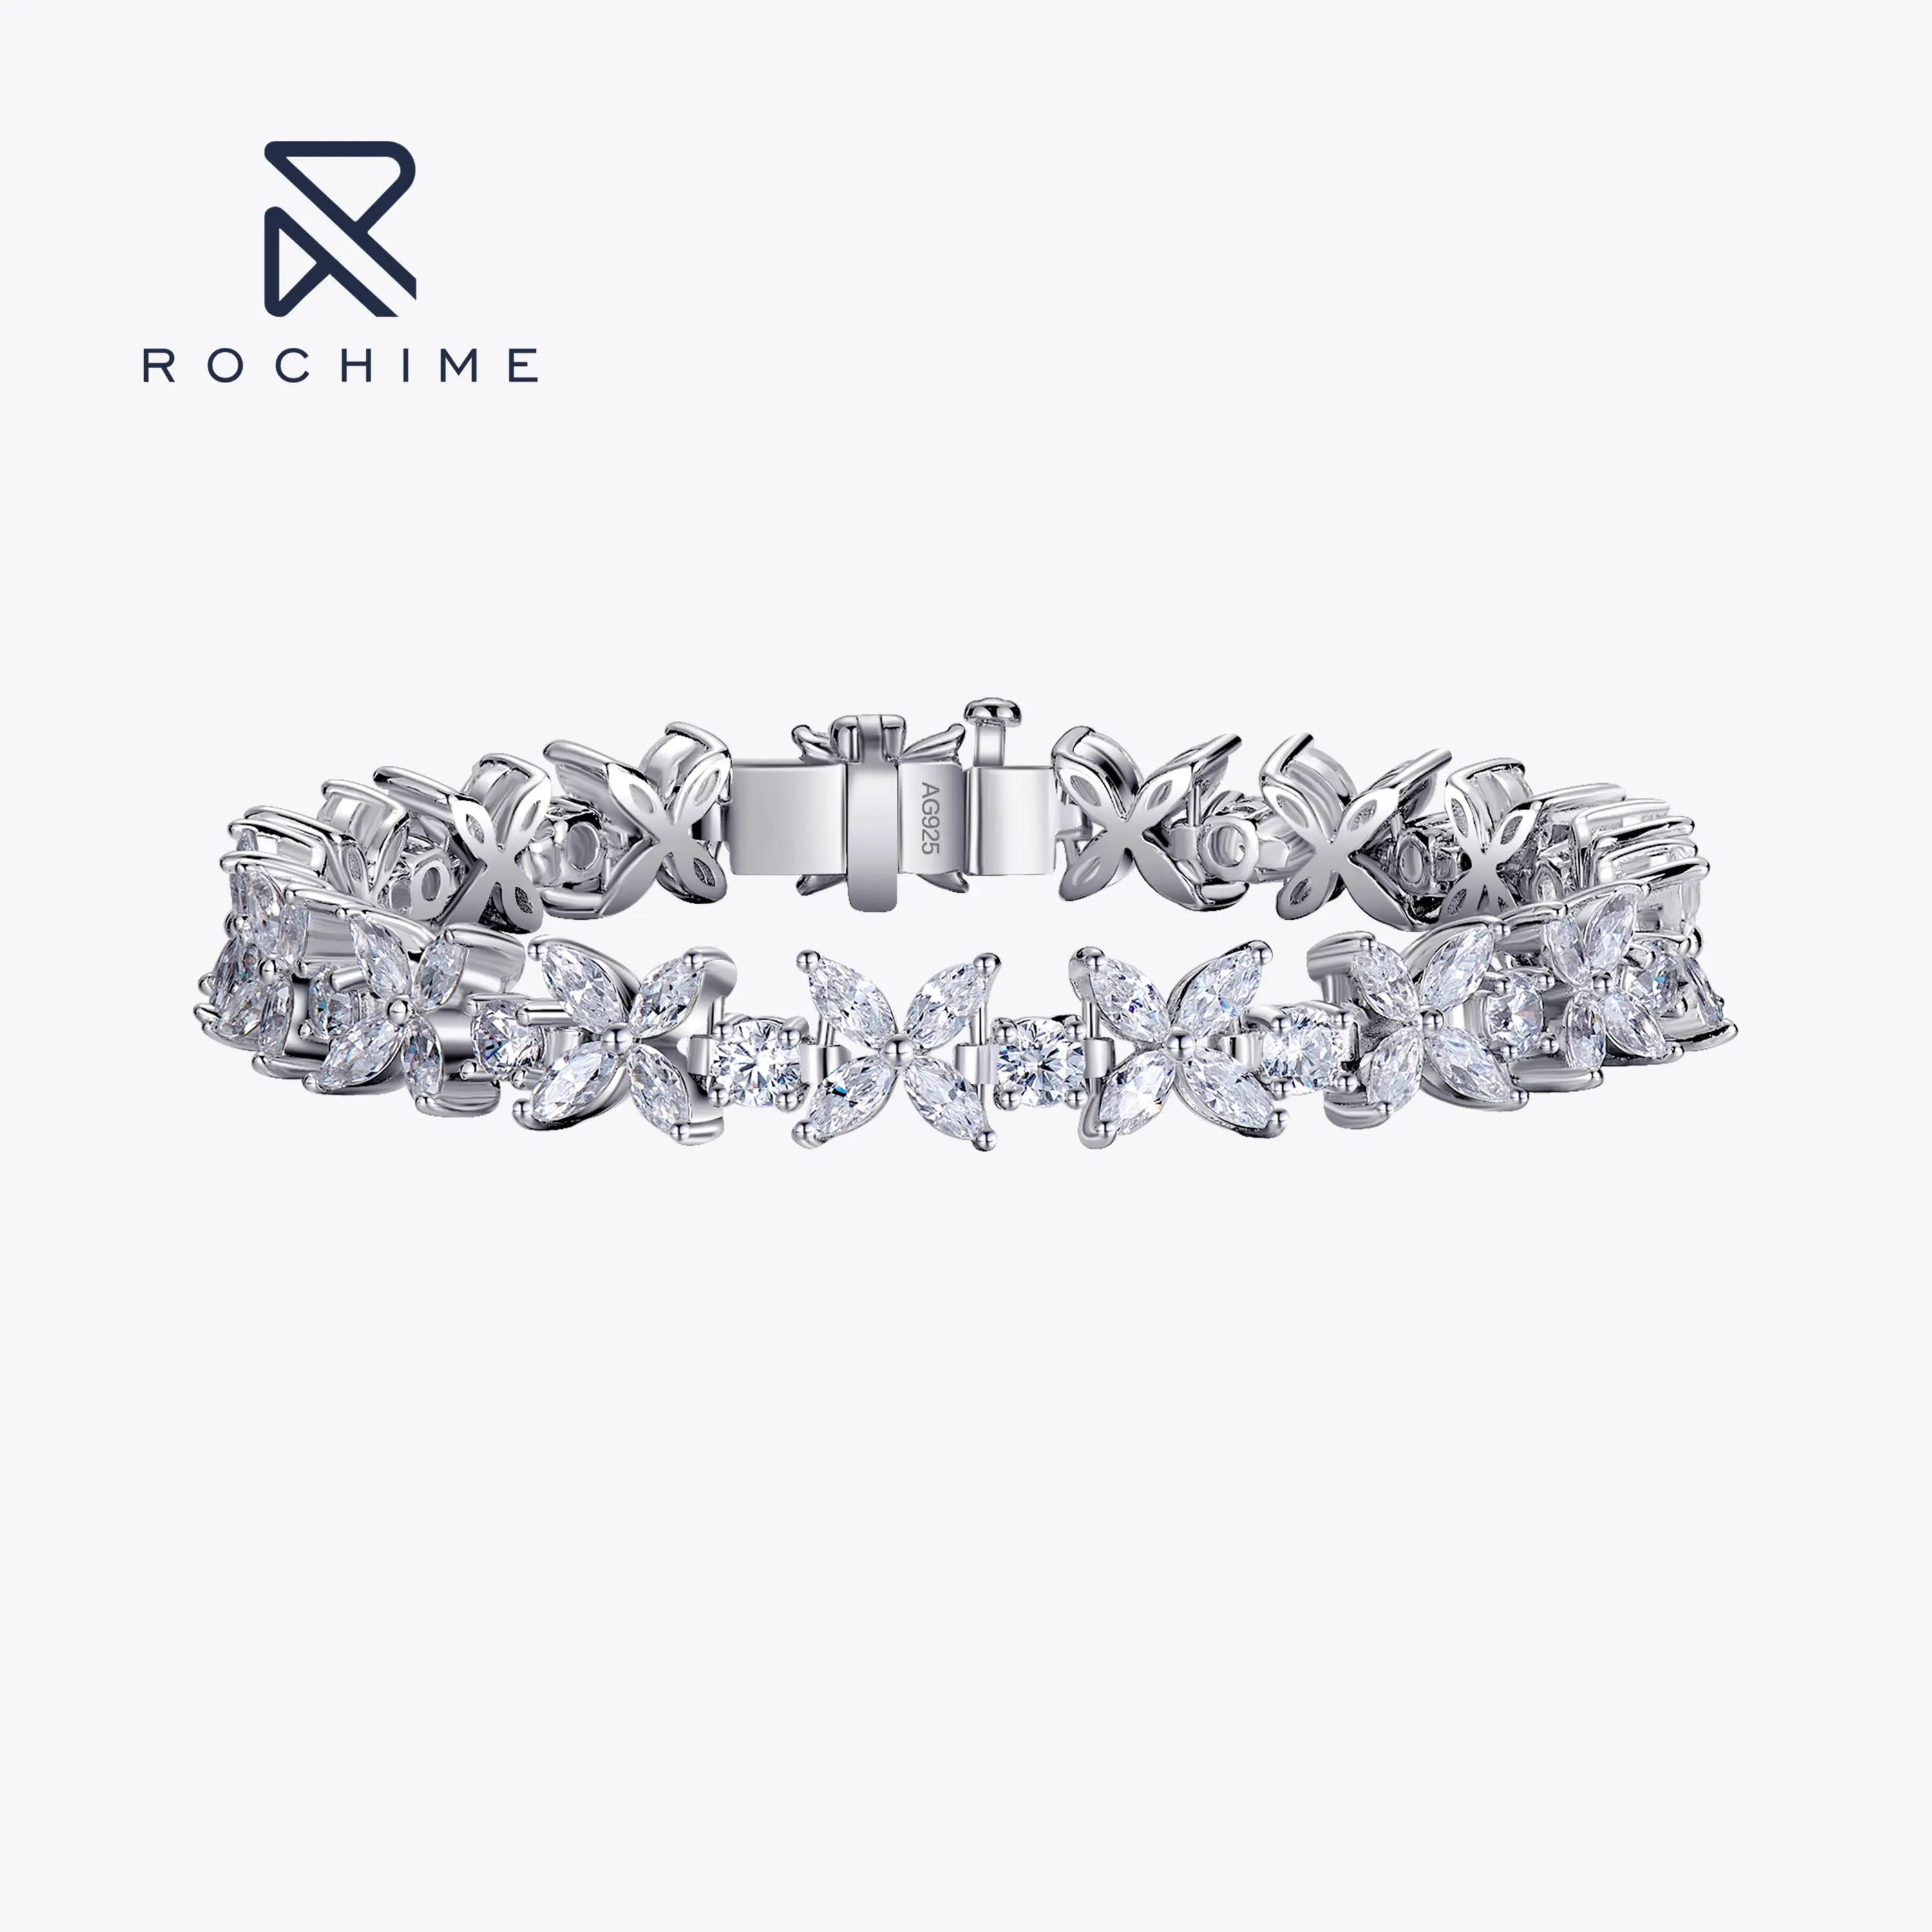 Rochime elegante Marquesa corte CZ diamante pulsera 925 plata esterlina oro blanco color joyería